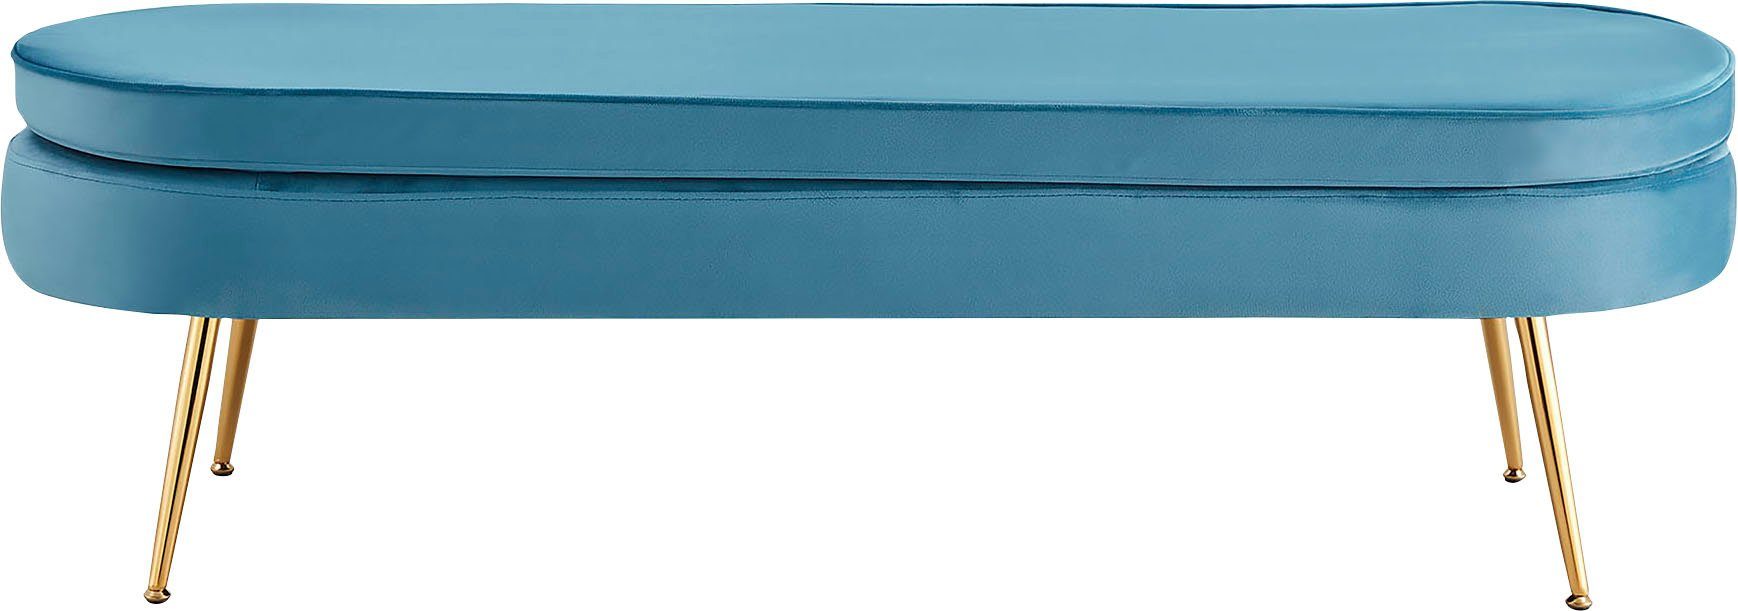 SalesFever Polsterbank Clam, Metallbeine Blau Breite goldfarbene cm, 142